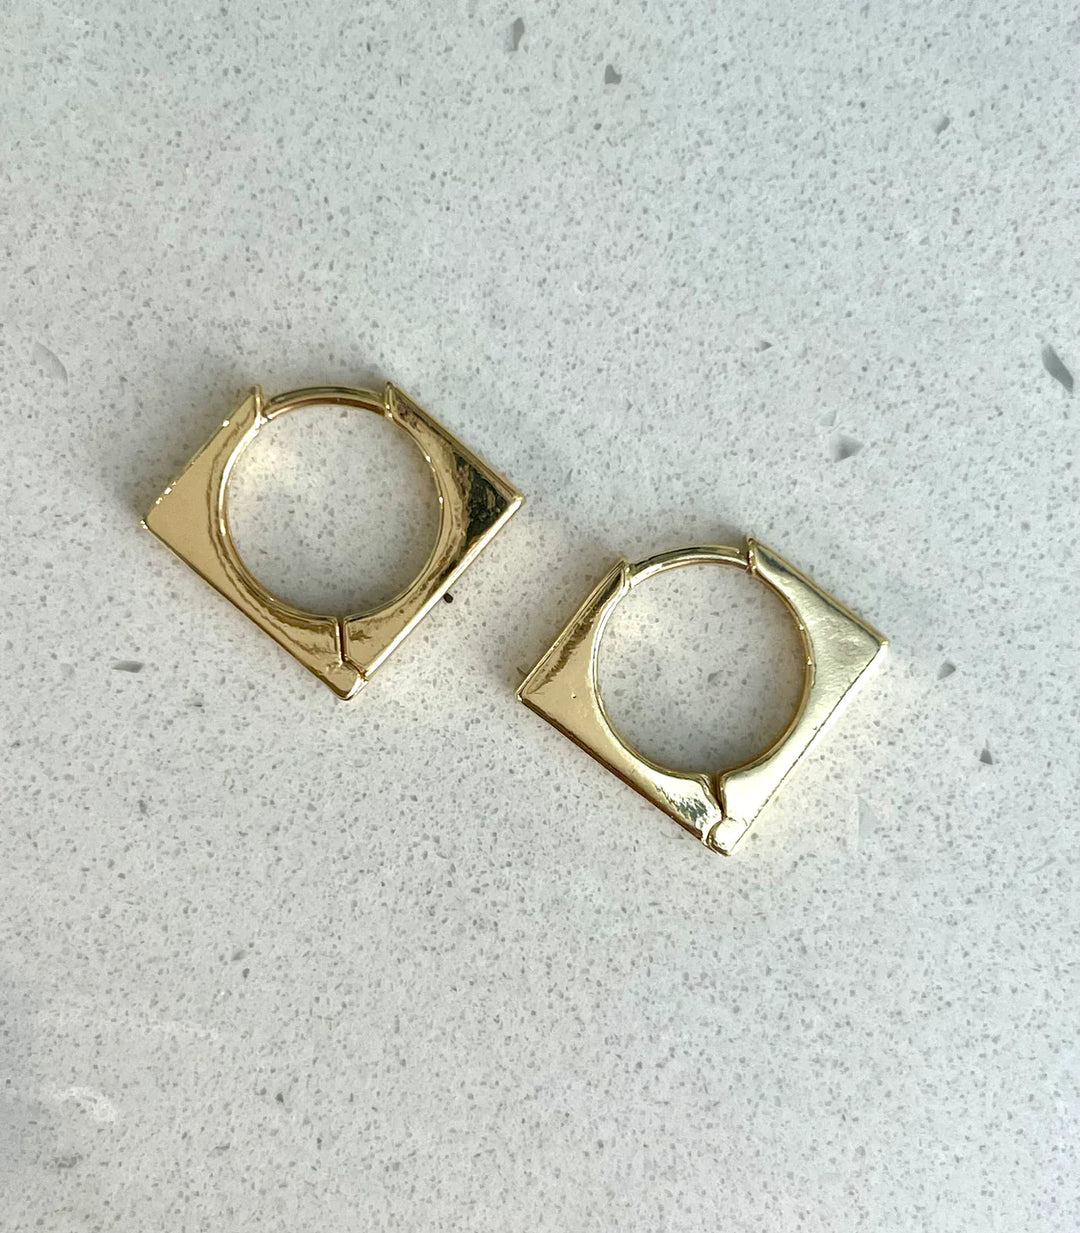 Earrings - NEW! Earrings & Studs in 18K Gold Filled - square hoops